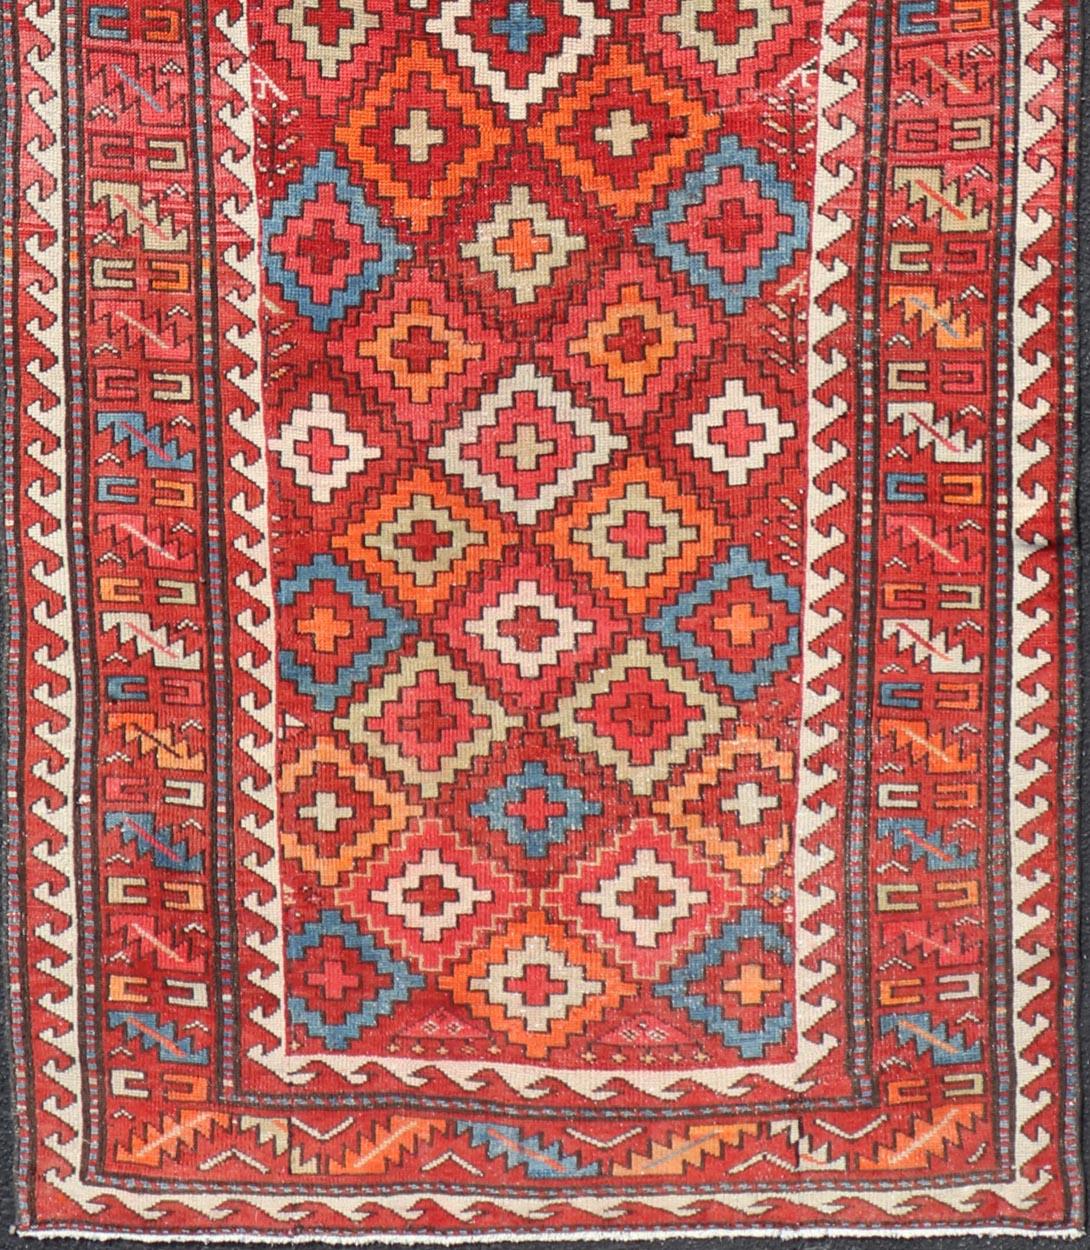 A very fine antique Persian Hamadan gallery runner with all-over design in rug background, Keivan Woven Arts / Rug EMB-9681-P13534, country of origin / type: Iran / Hamadan, circa 1920

Measures: 4'2 x 11'5.